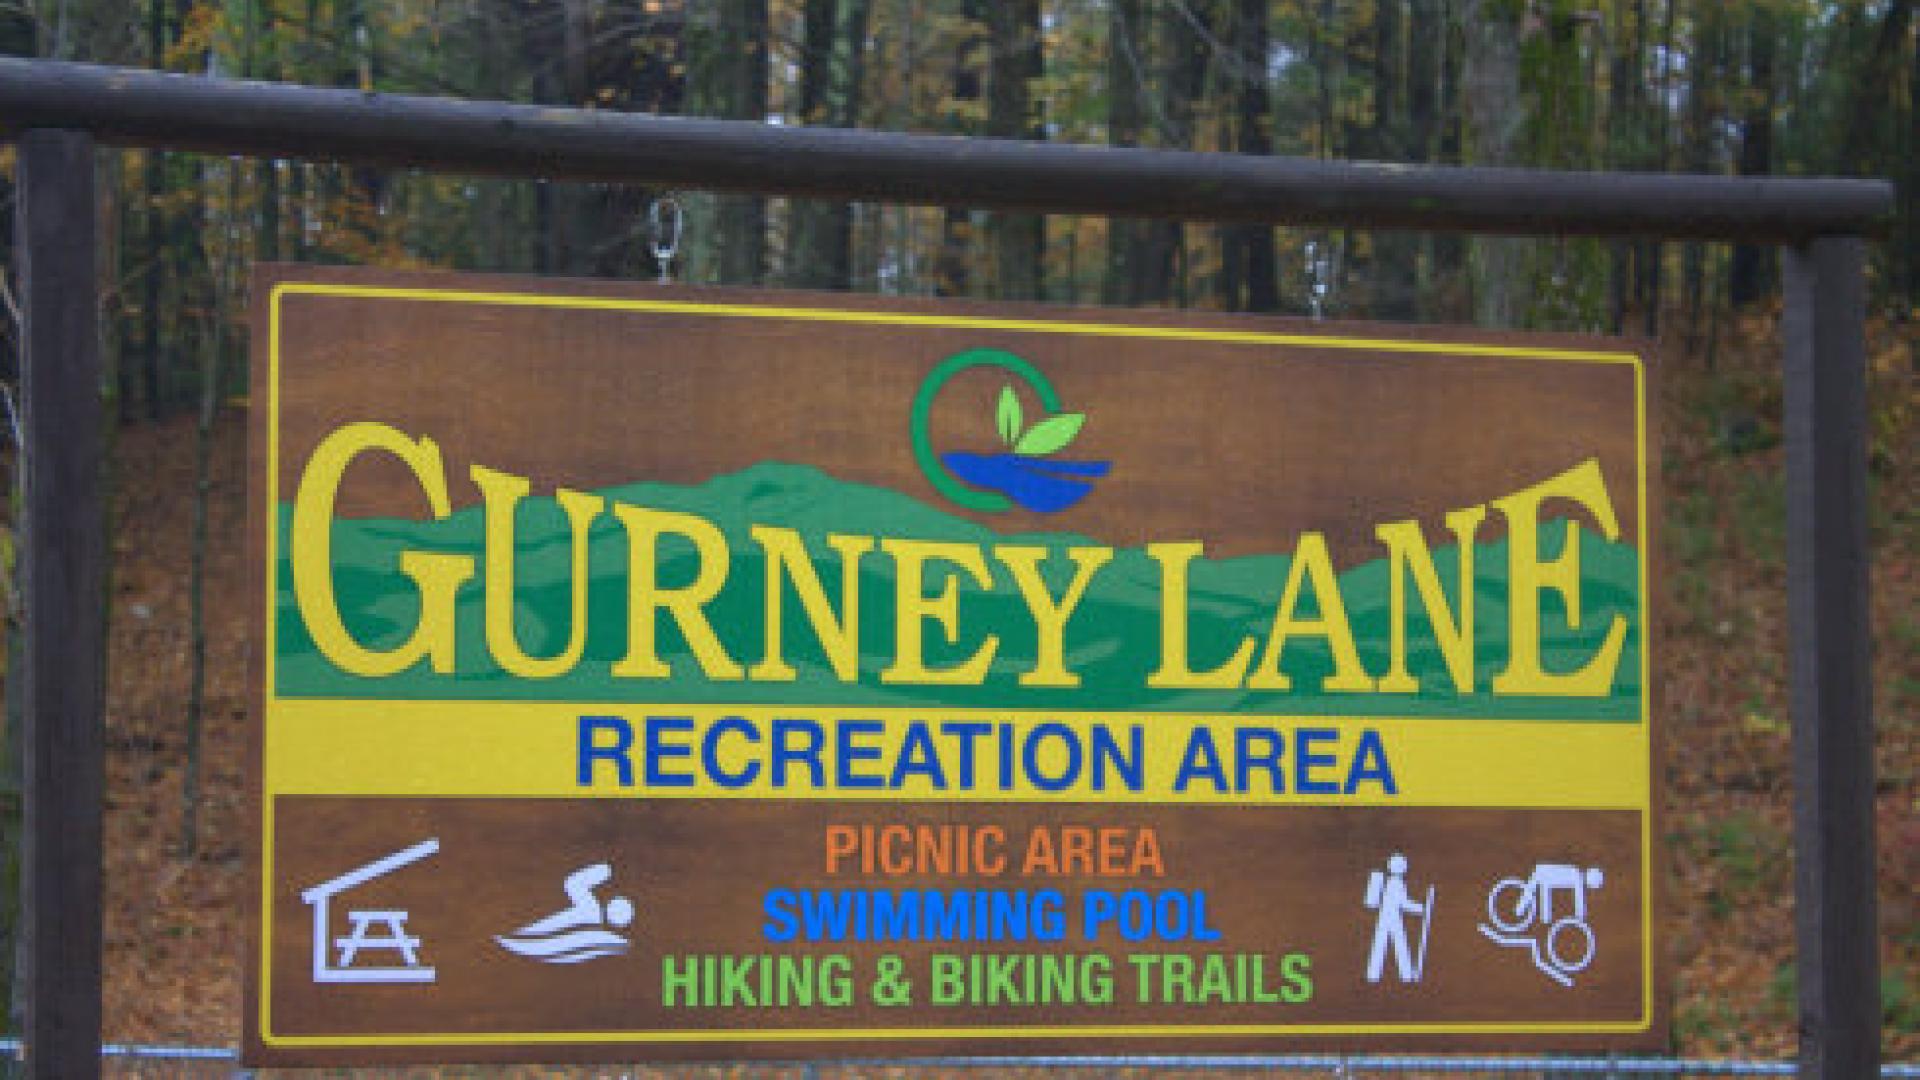 Gurney Lane Recreation Area